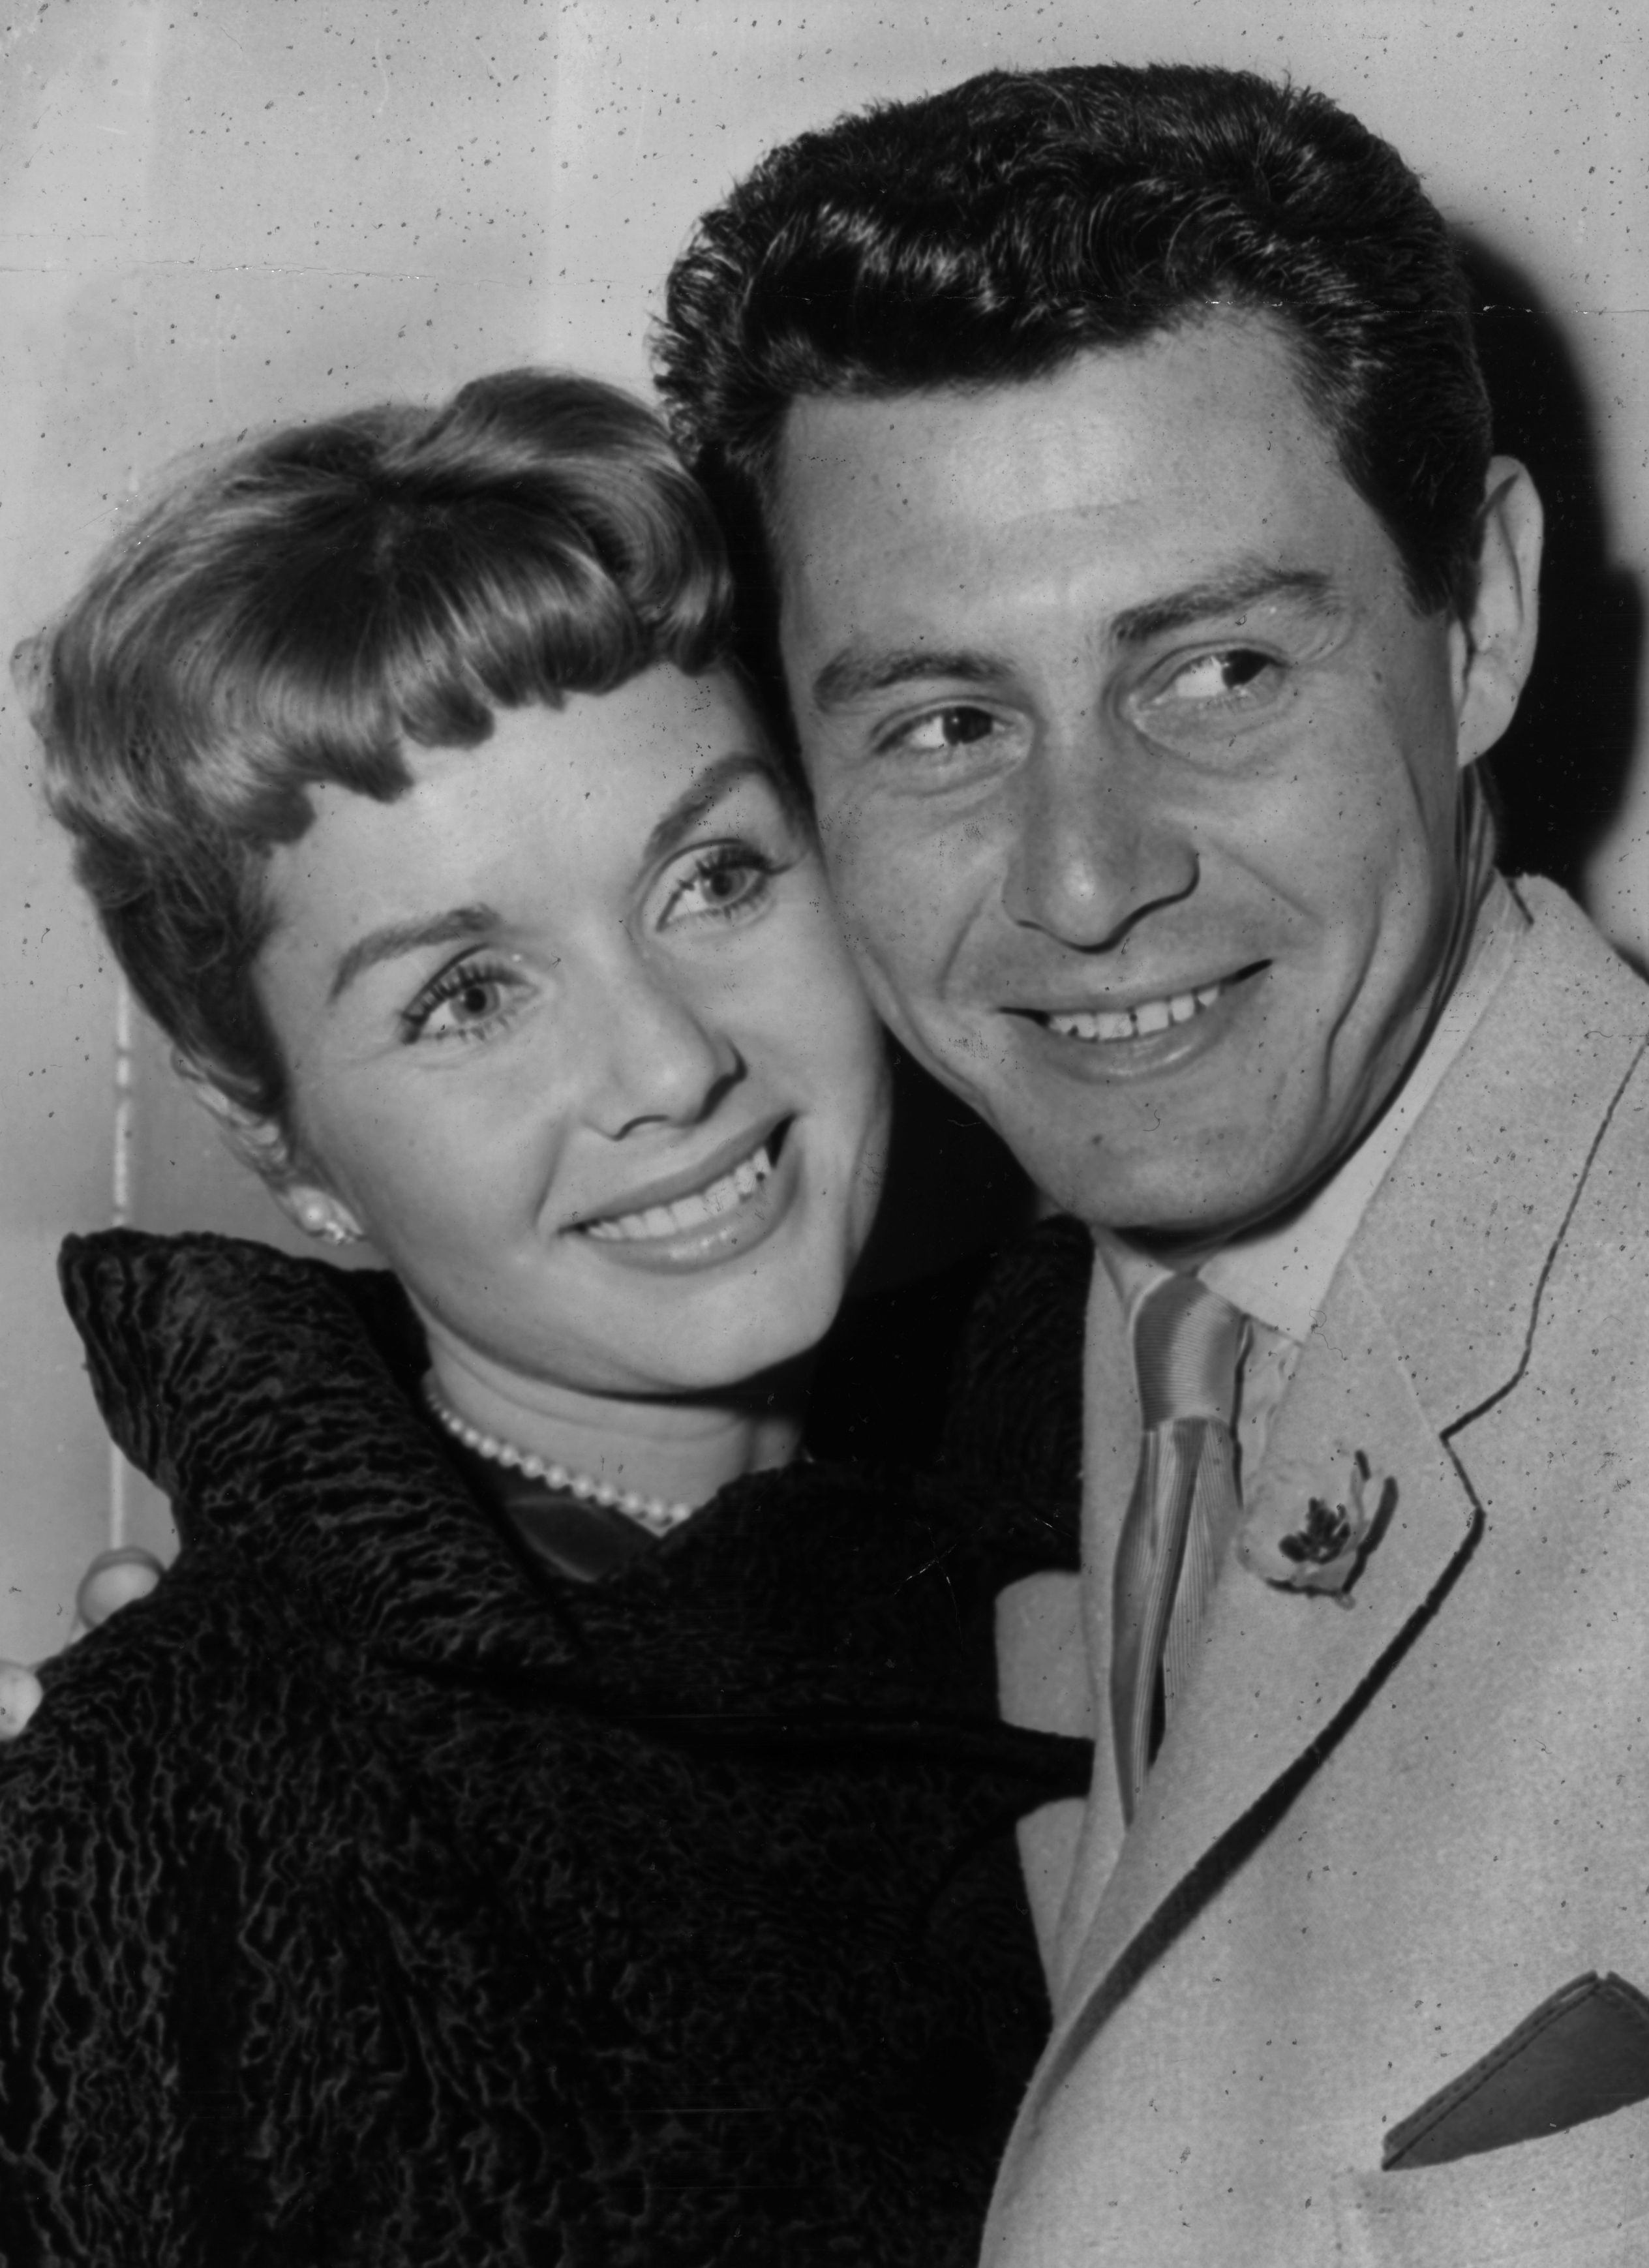 Eddie Fisher, Debbie Reynolds' First Husband 5 Fast Facts